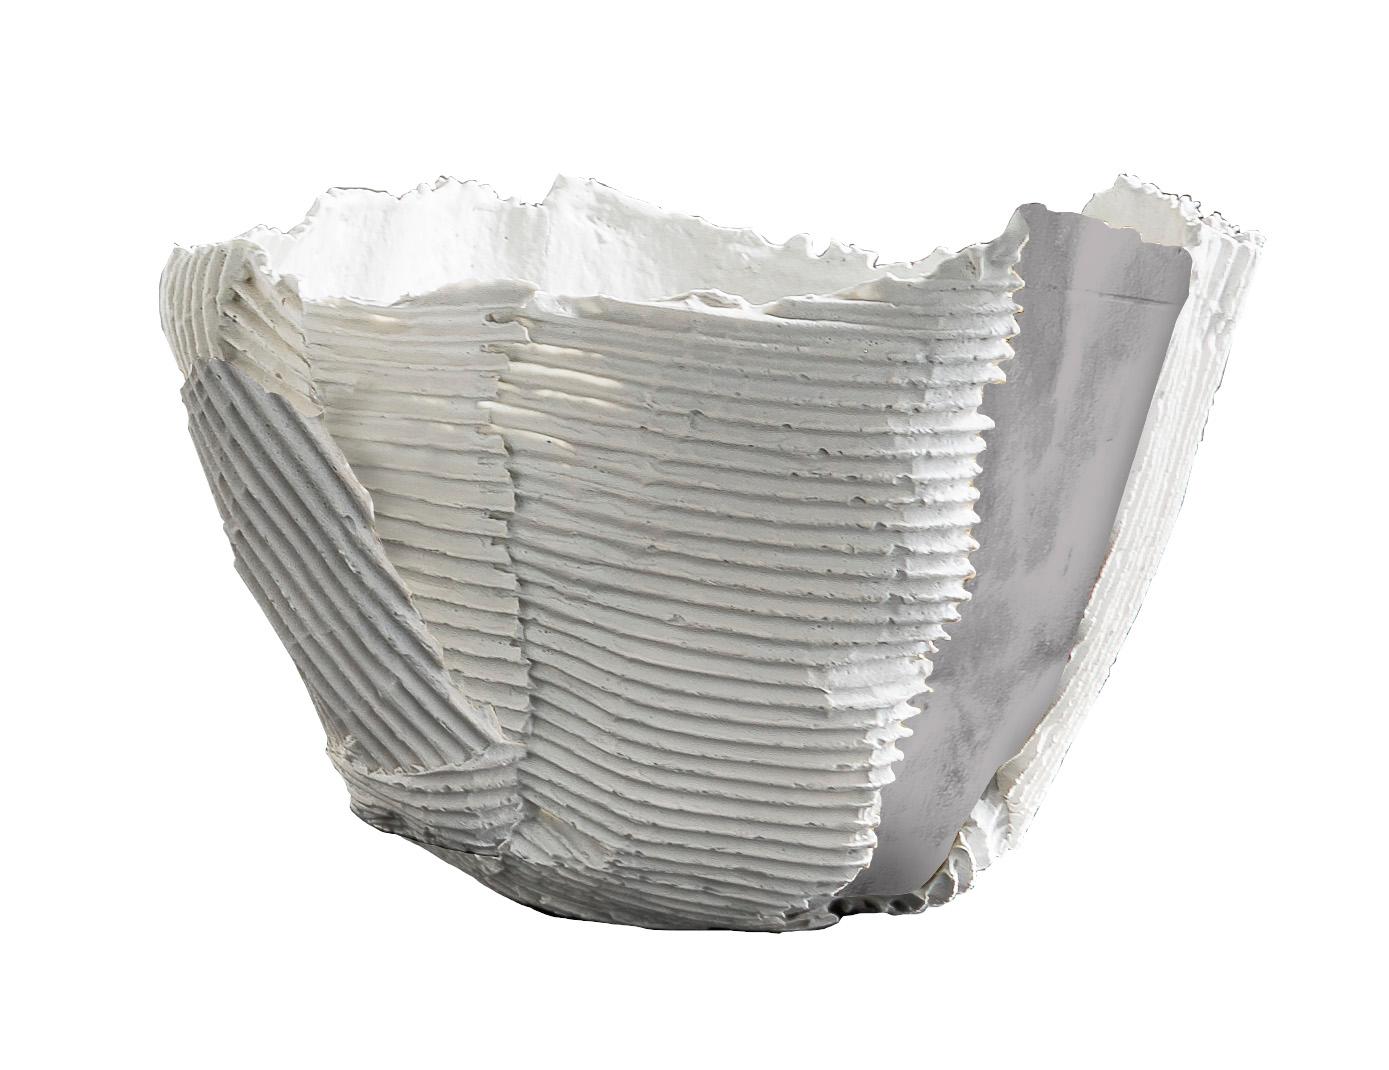 Italian Contemporary Ceramic Cartocci Texture White and Gray Bowl For Sale